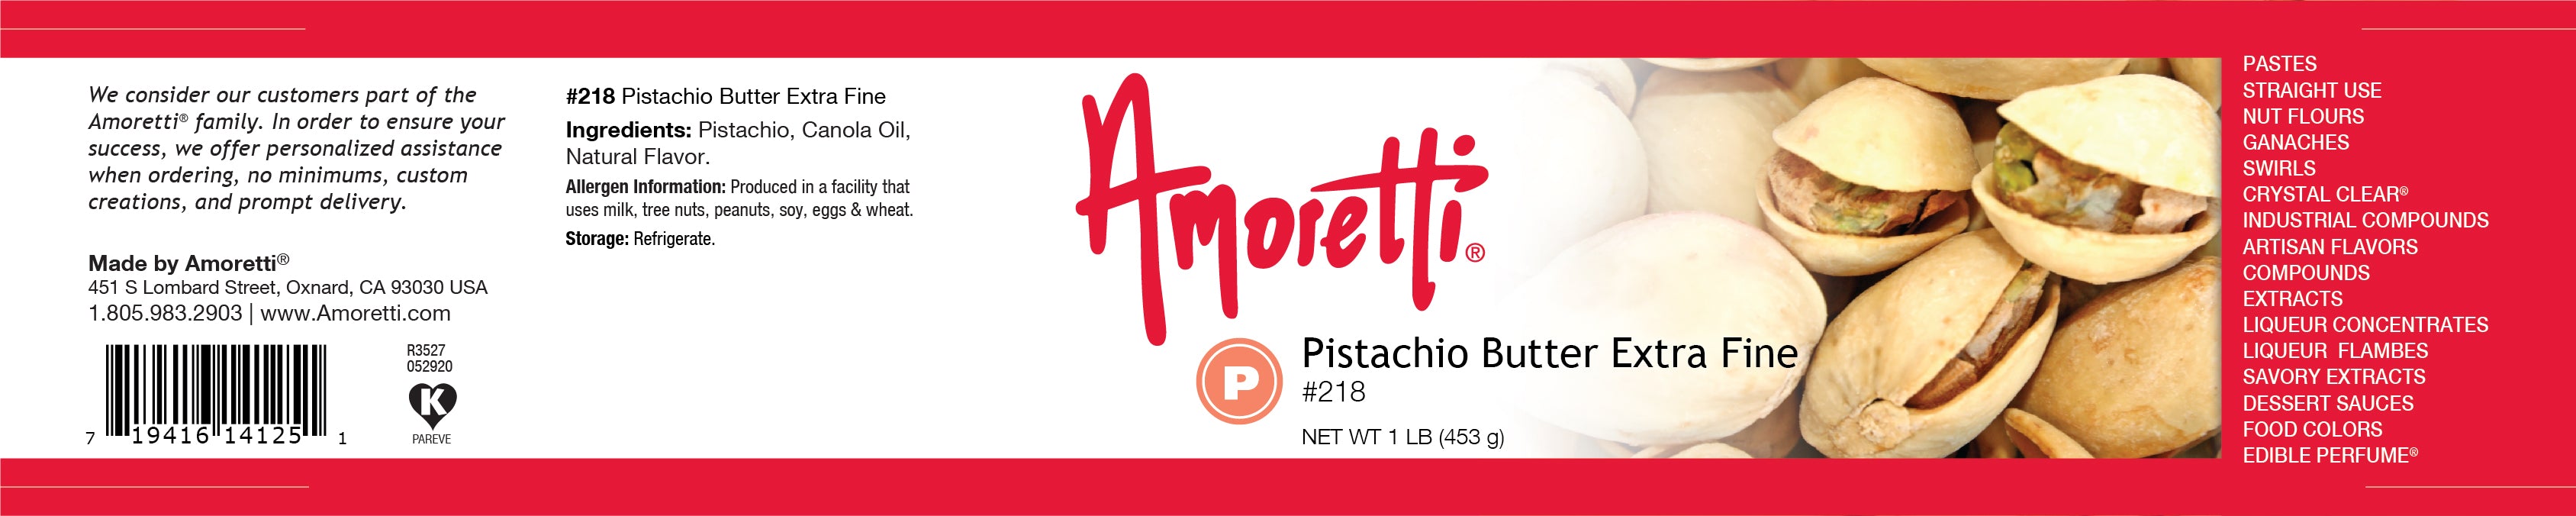 Pistachio Butter Extra Fine (refrigerate)